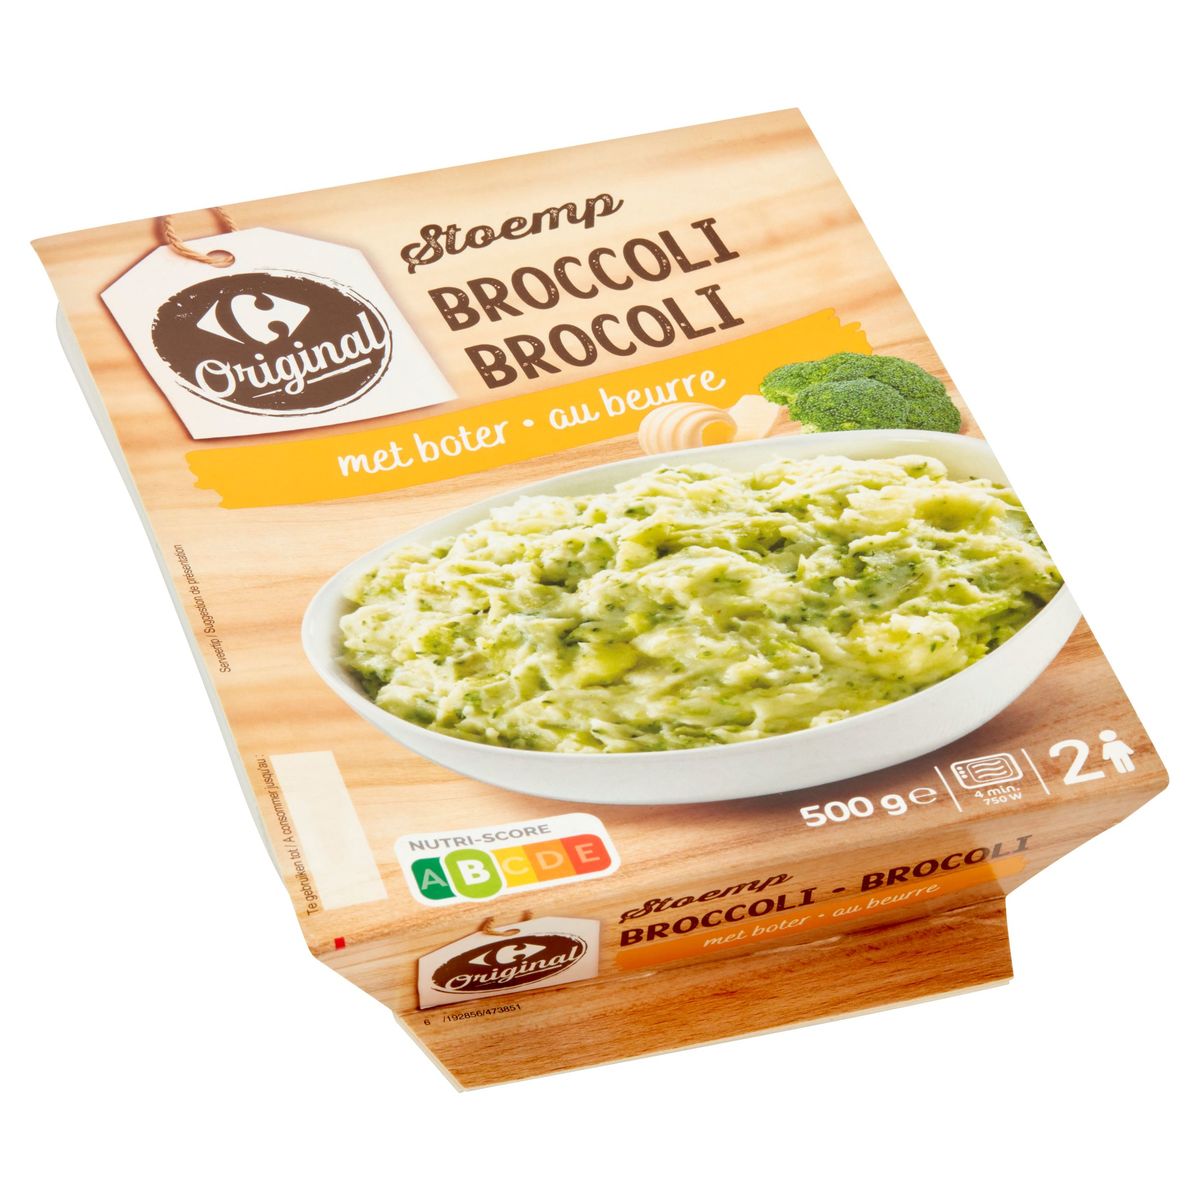 Carrefour Original Stoemp Broccoli met Boter 500 g